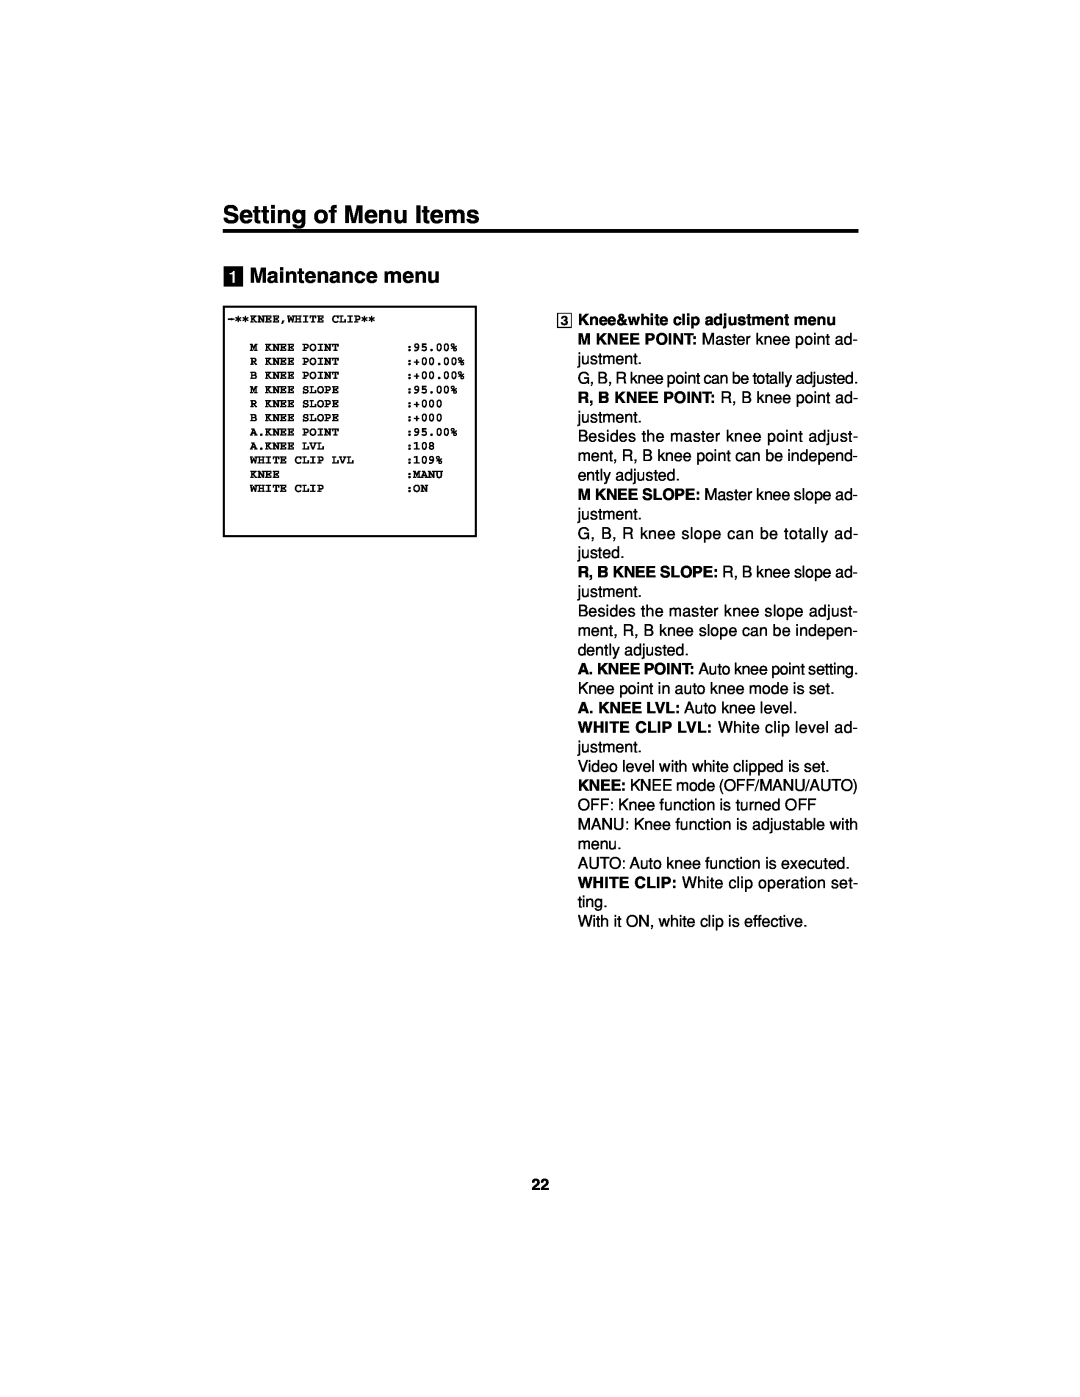 Panasonic AK-HC900 manual Knee&white clip adjustment menu, Setting of Menu Items, Maintenance menu 